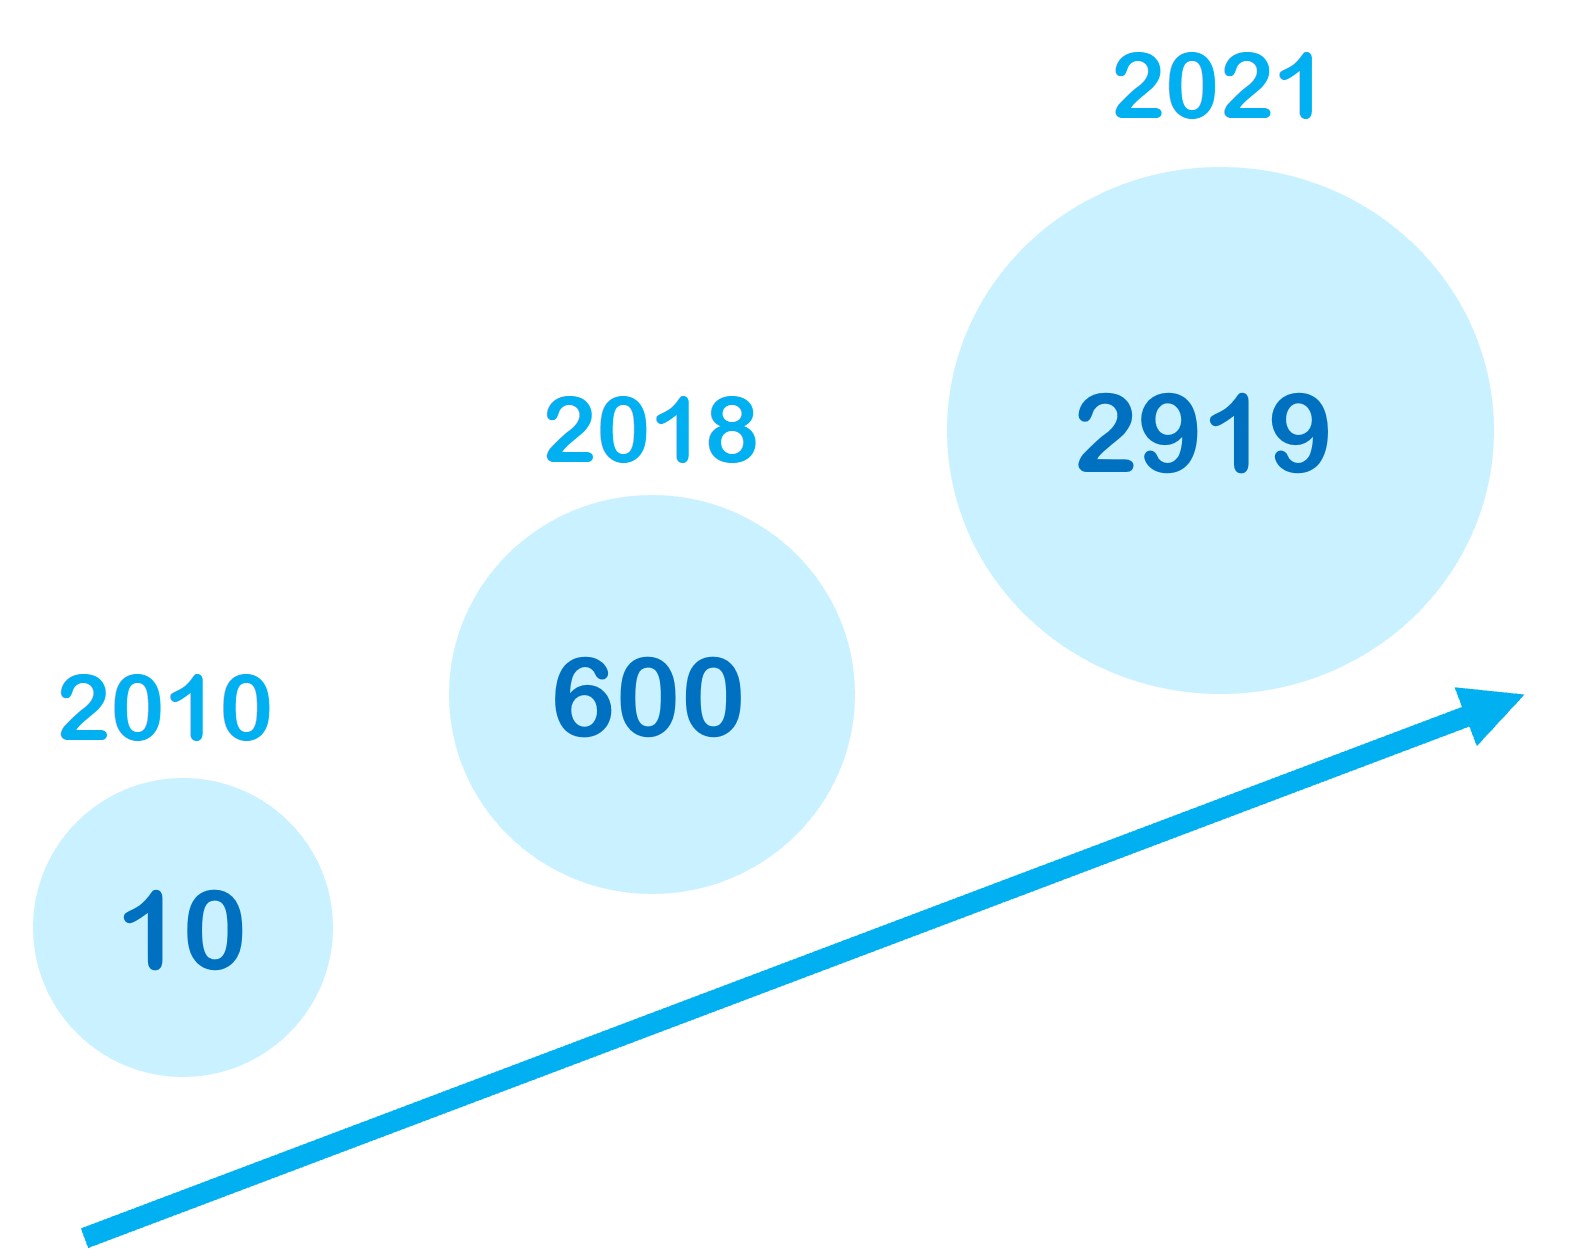 Development of Scientific Publications on Microplastics in 2010, 2018, and 2021 © Wasser  3.0